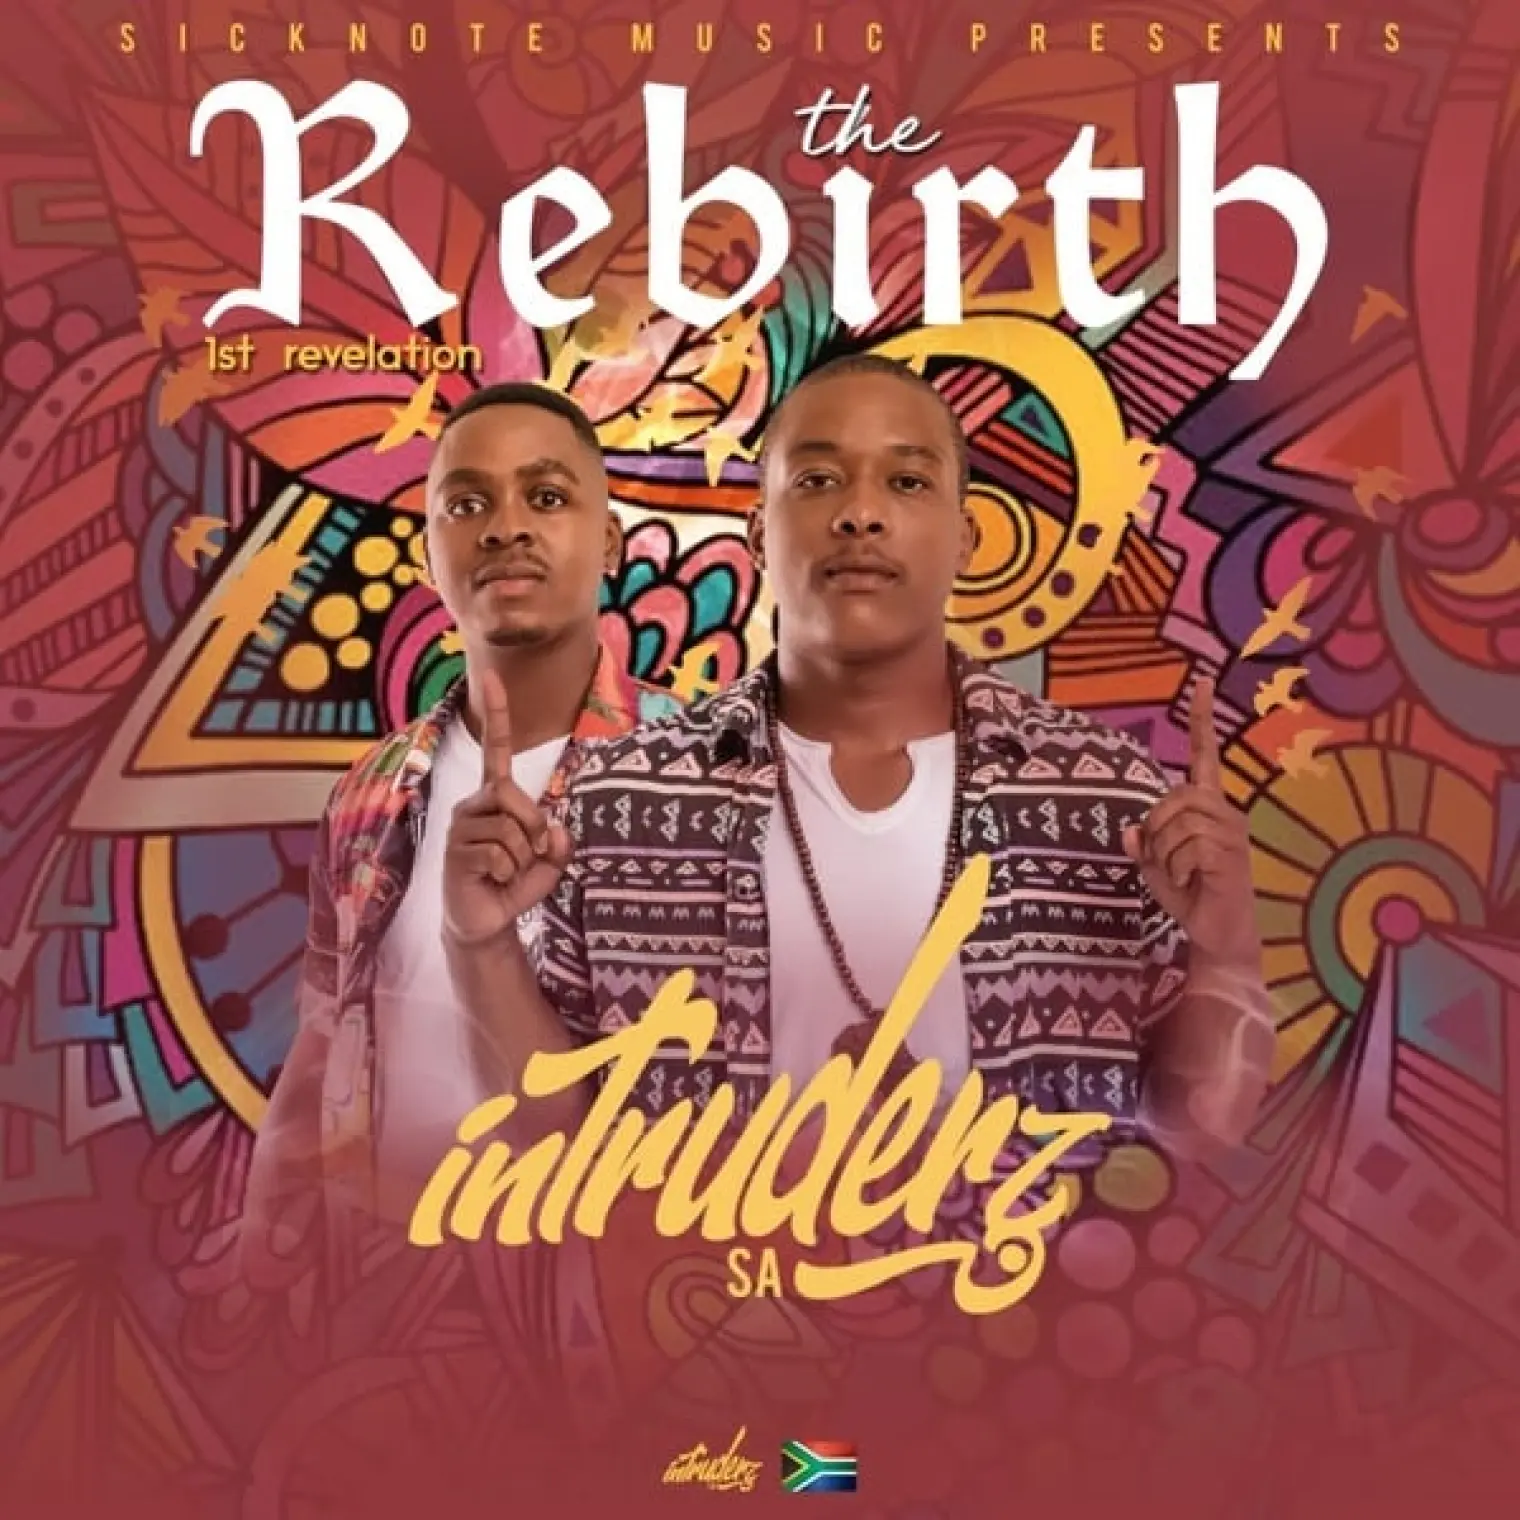 The Rebirth (1st Revelation) -  Intruderz SA 